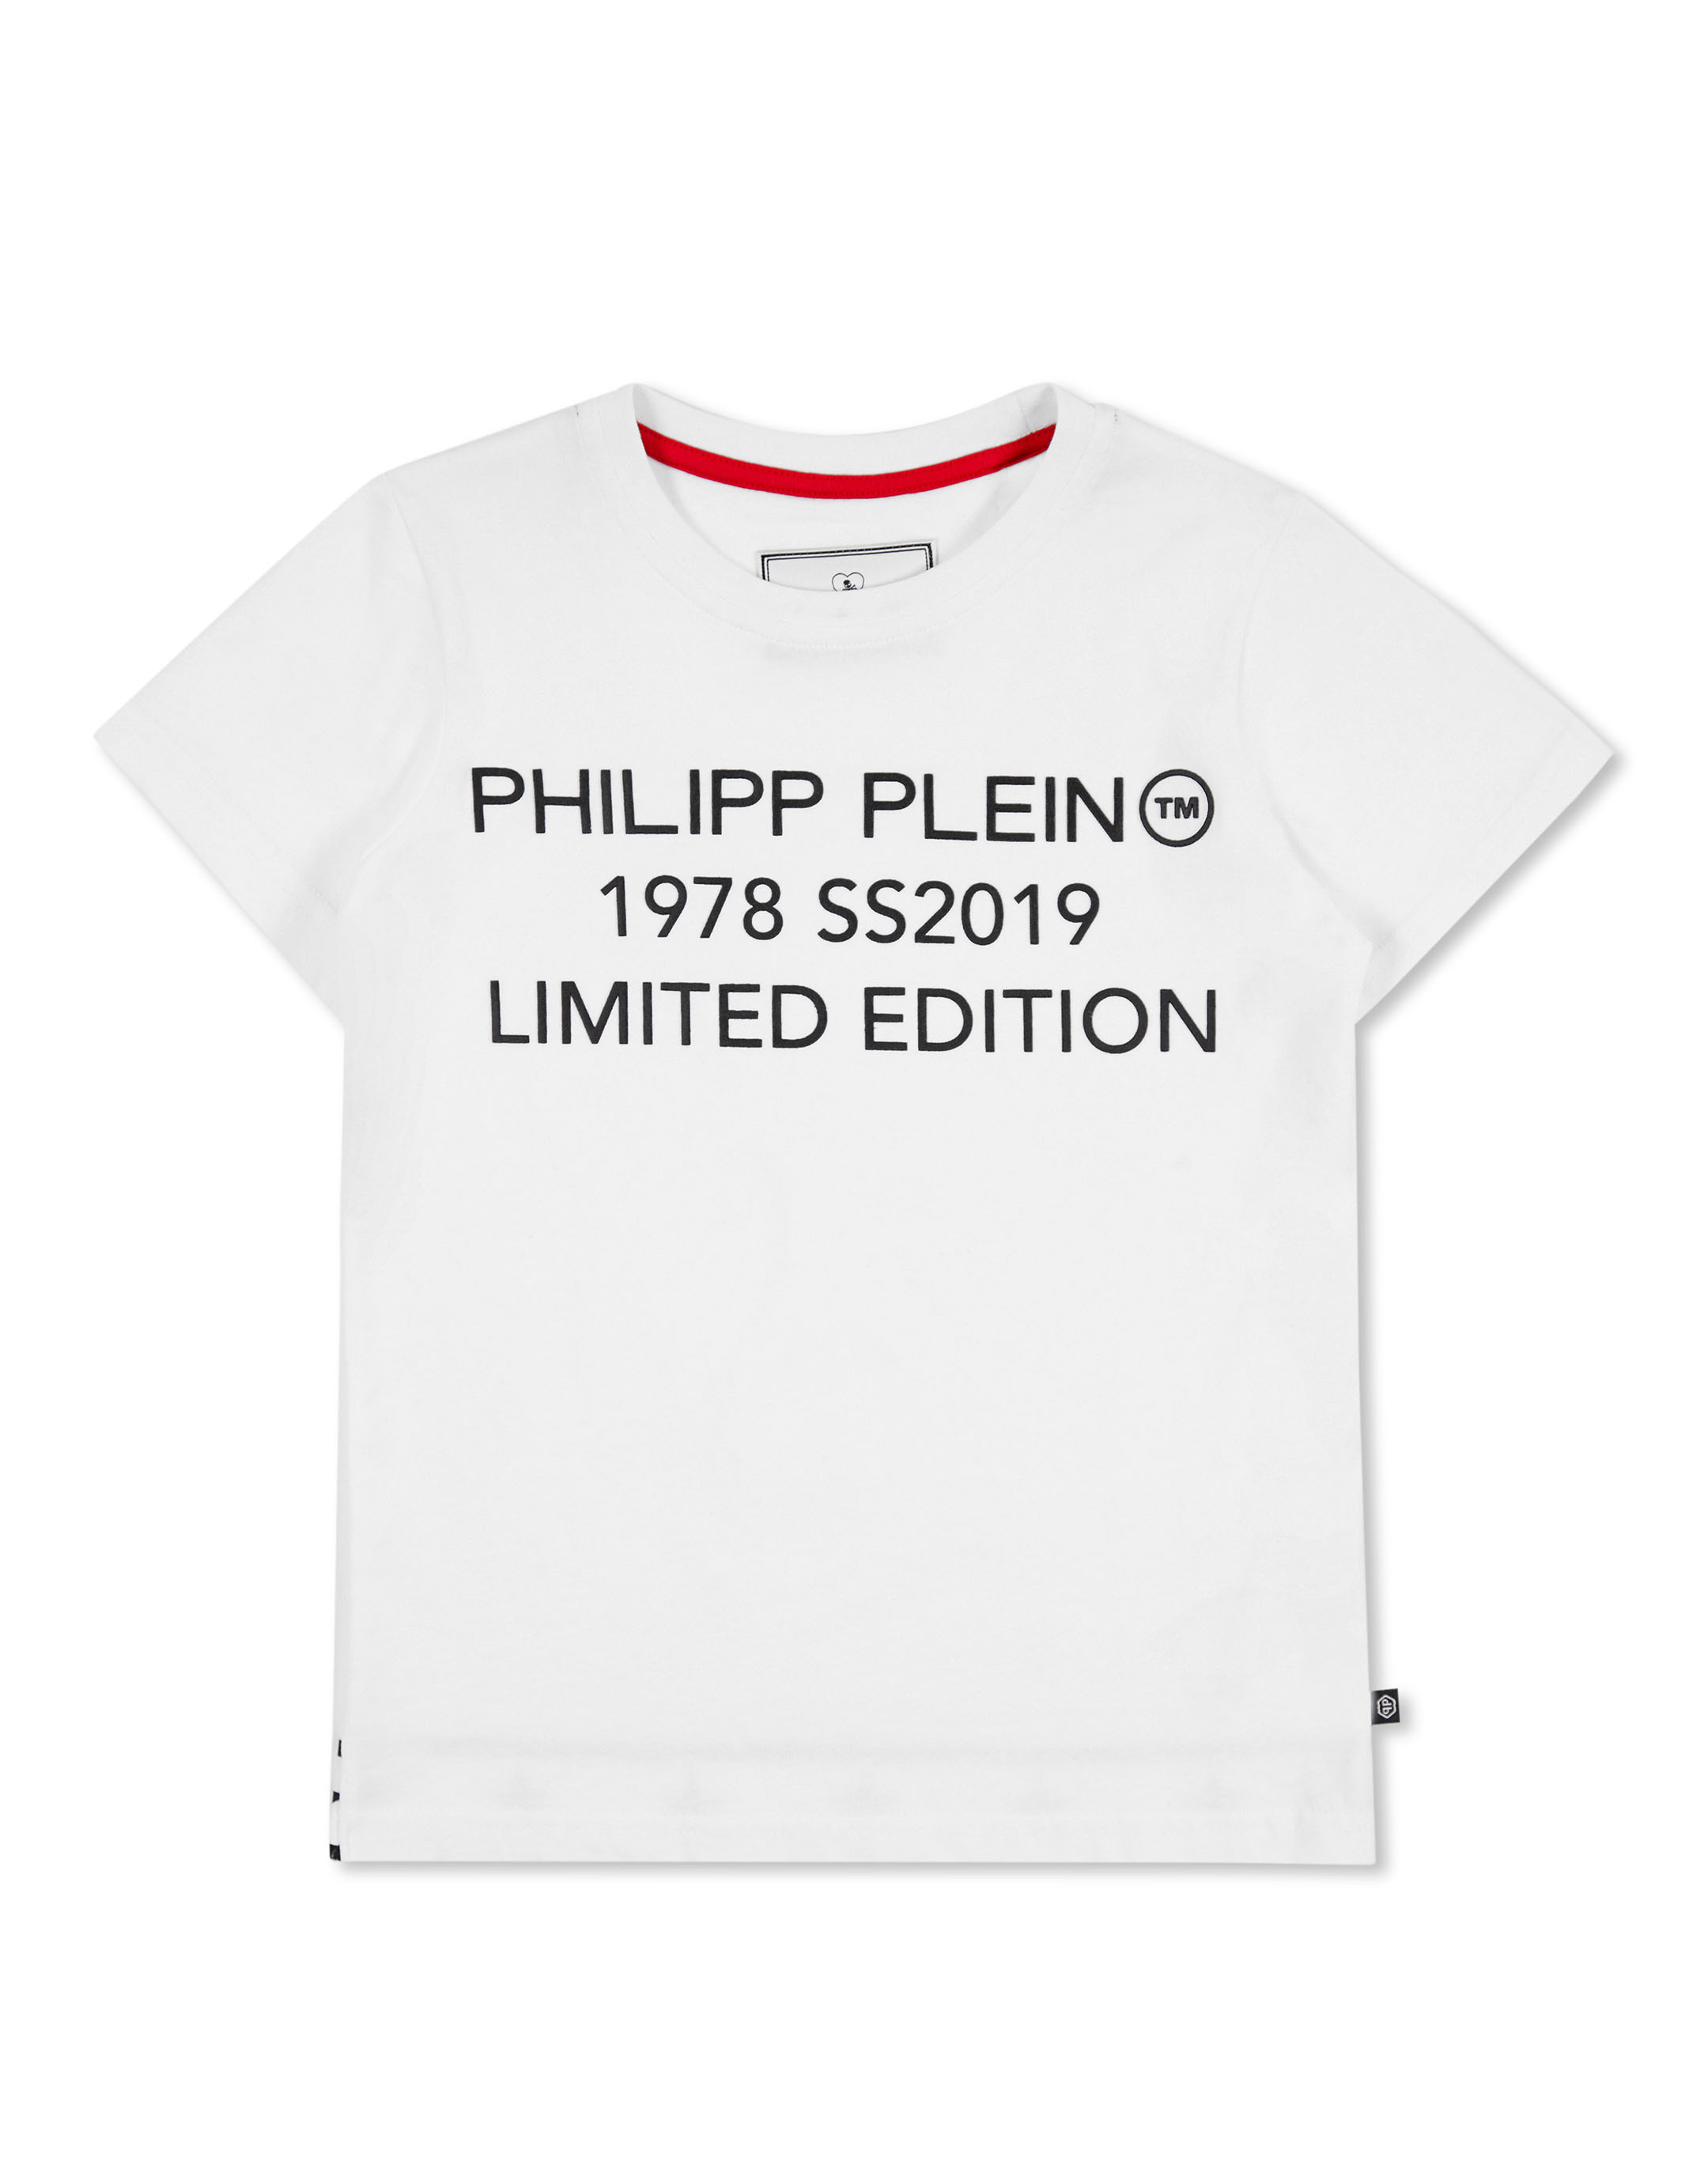 philipp plein limited edition 1978